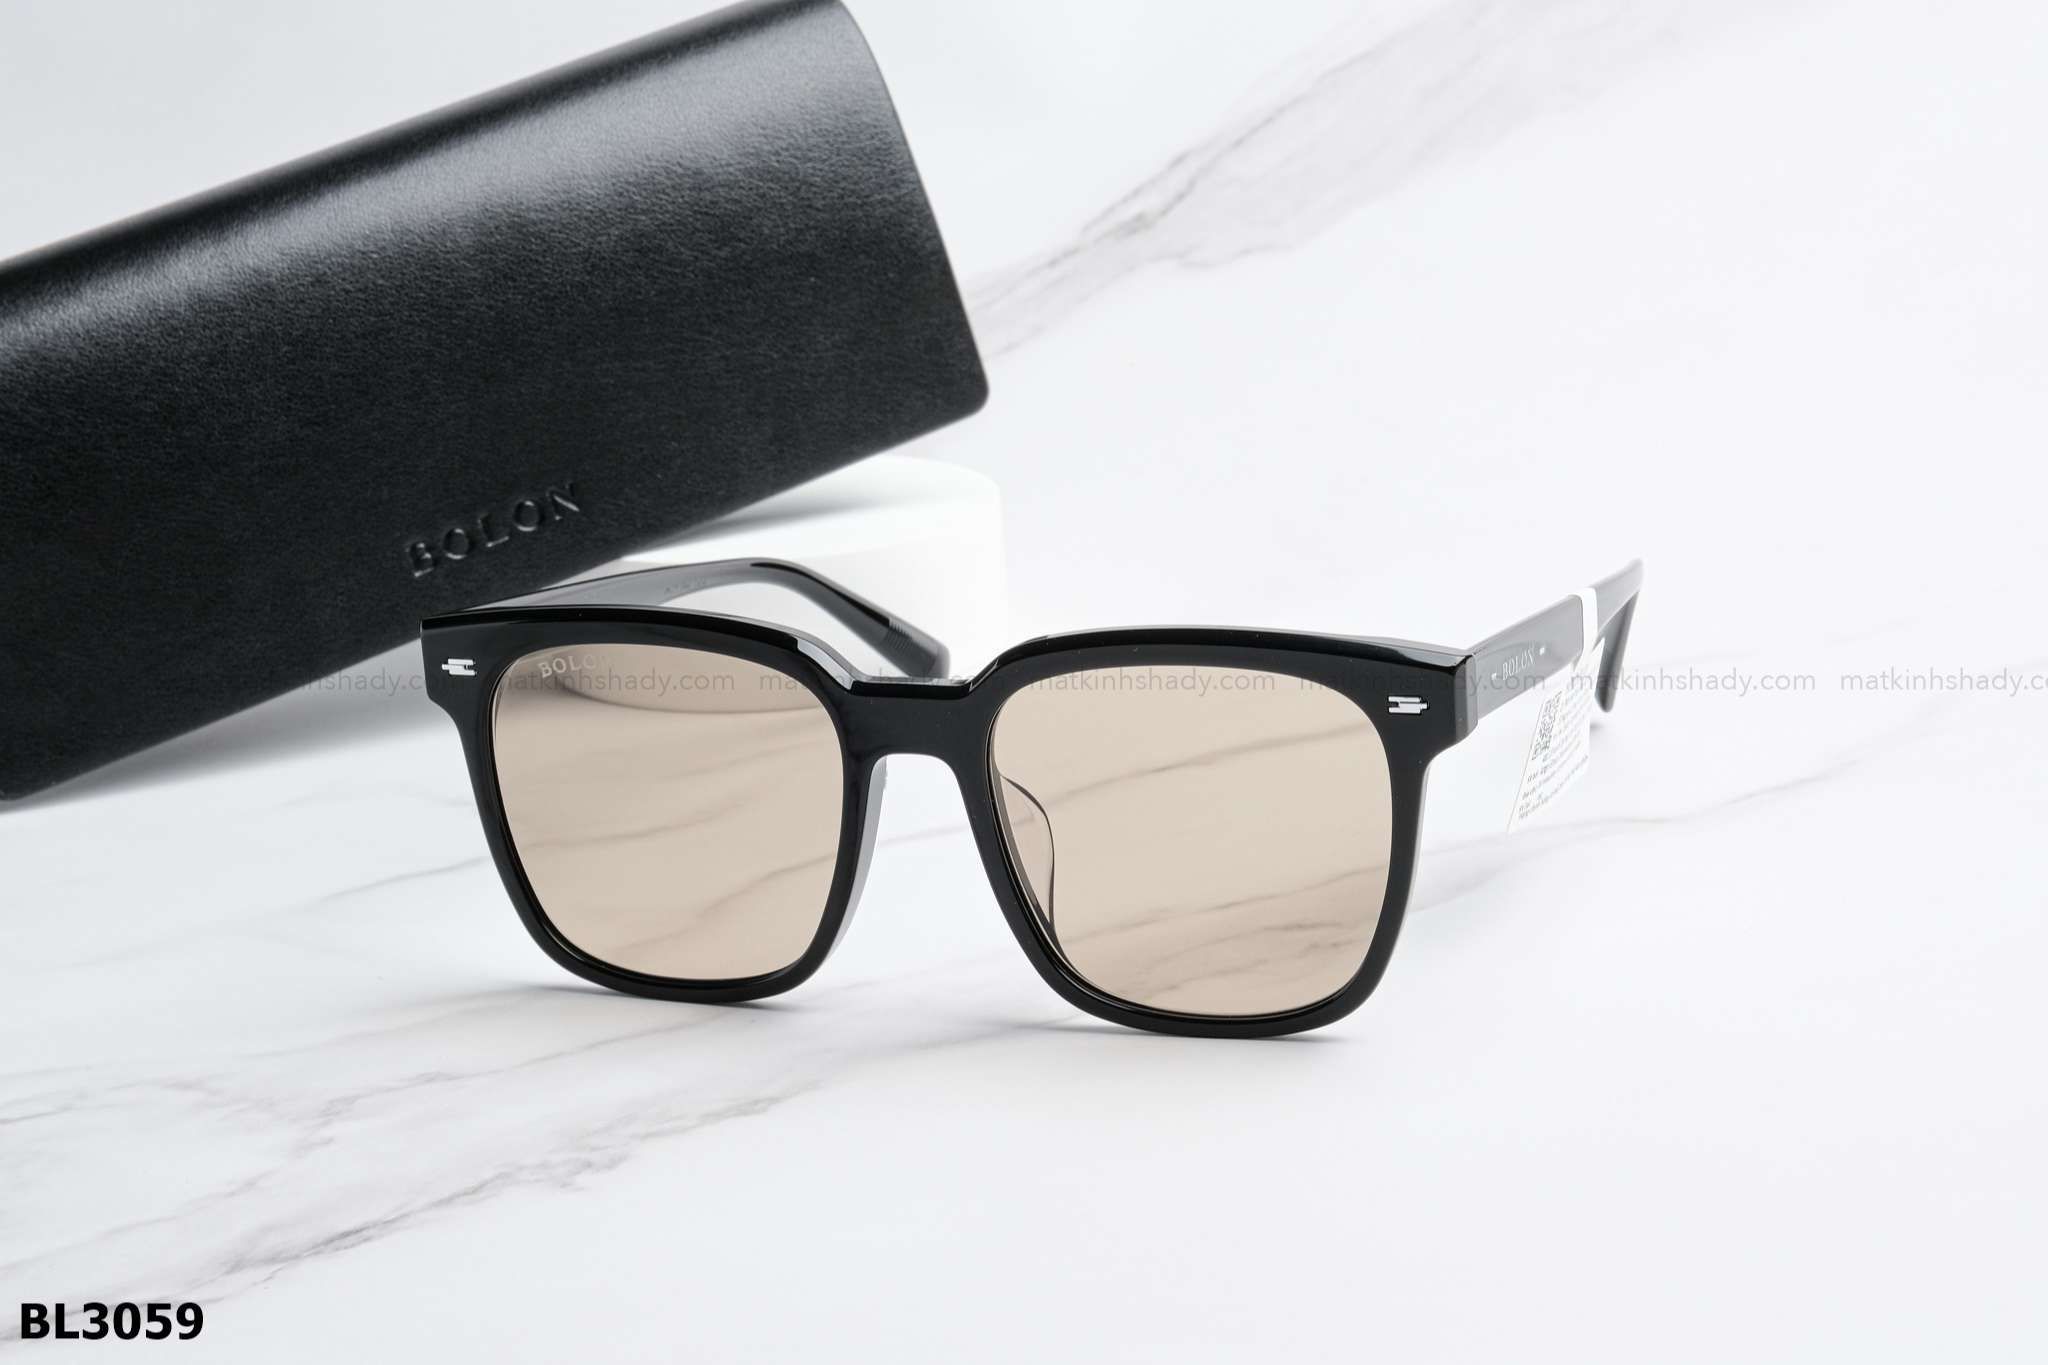  Bolon Eyewear - Sunglasses - BL3059 